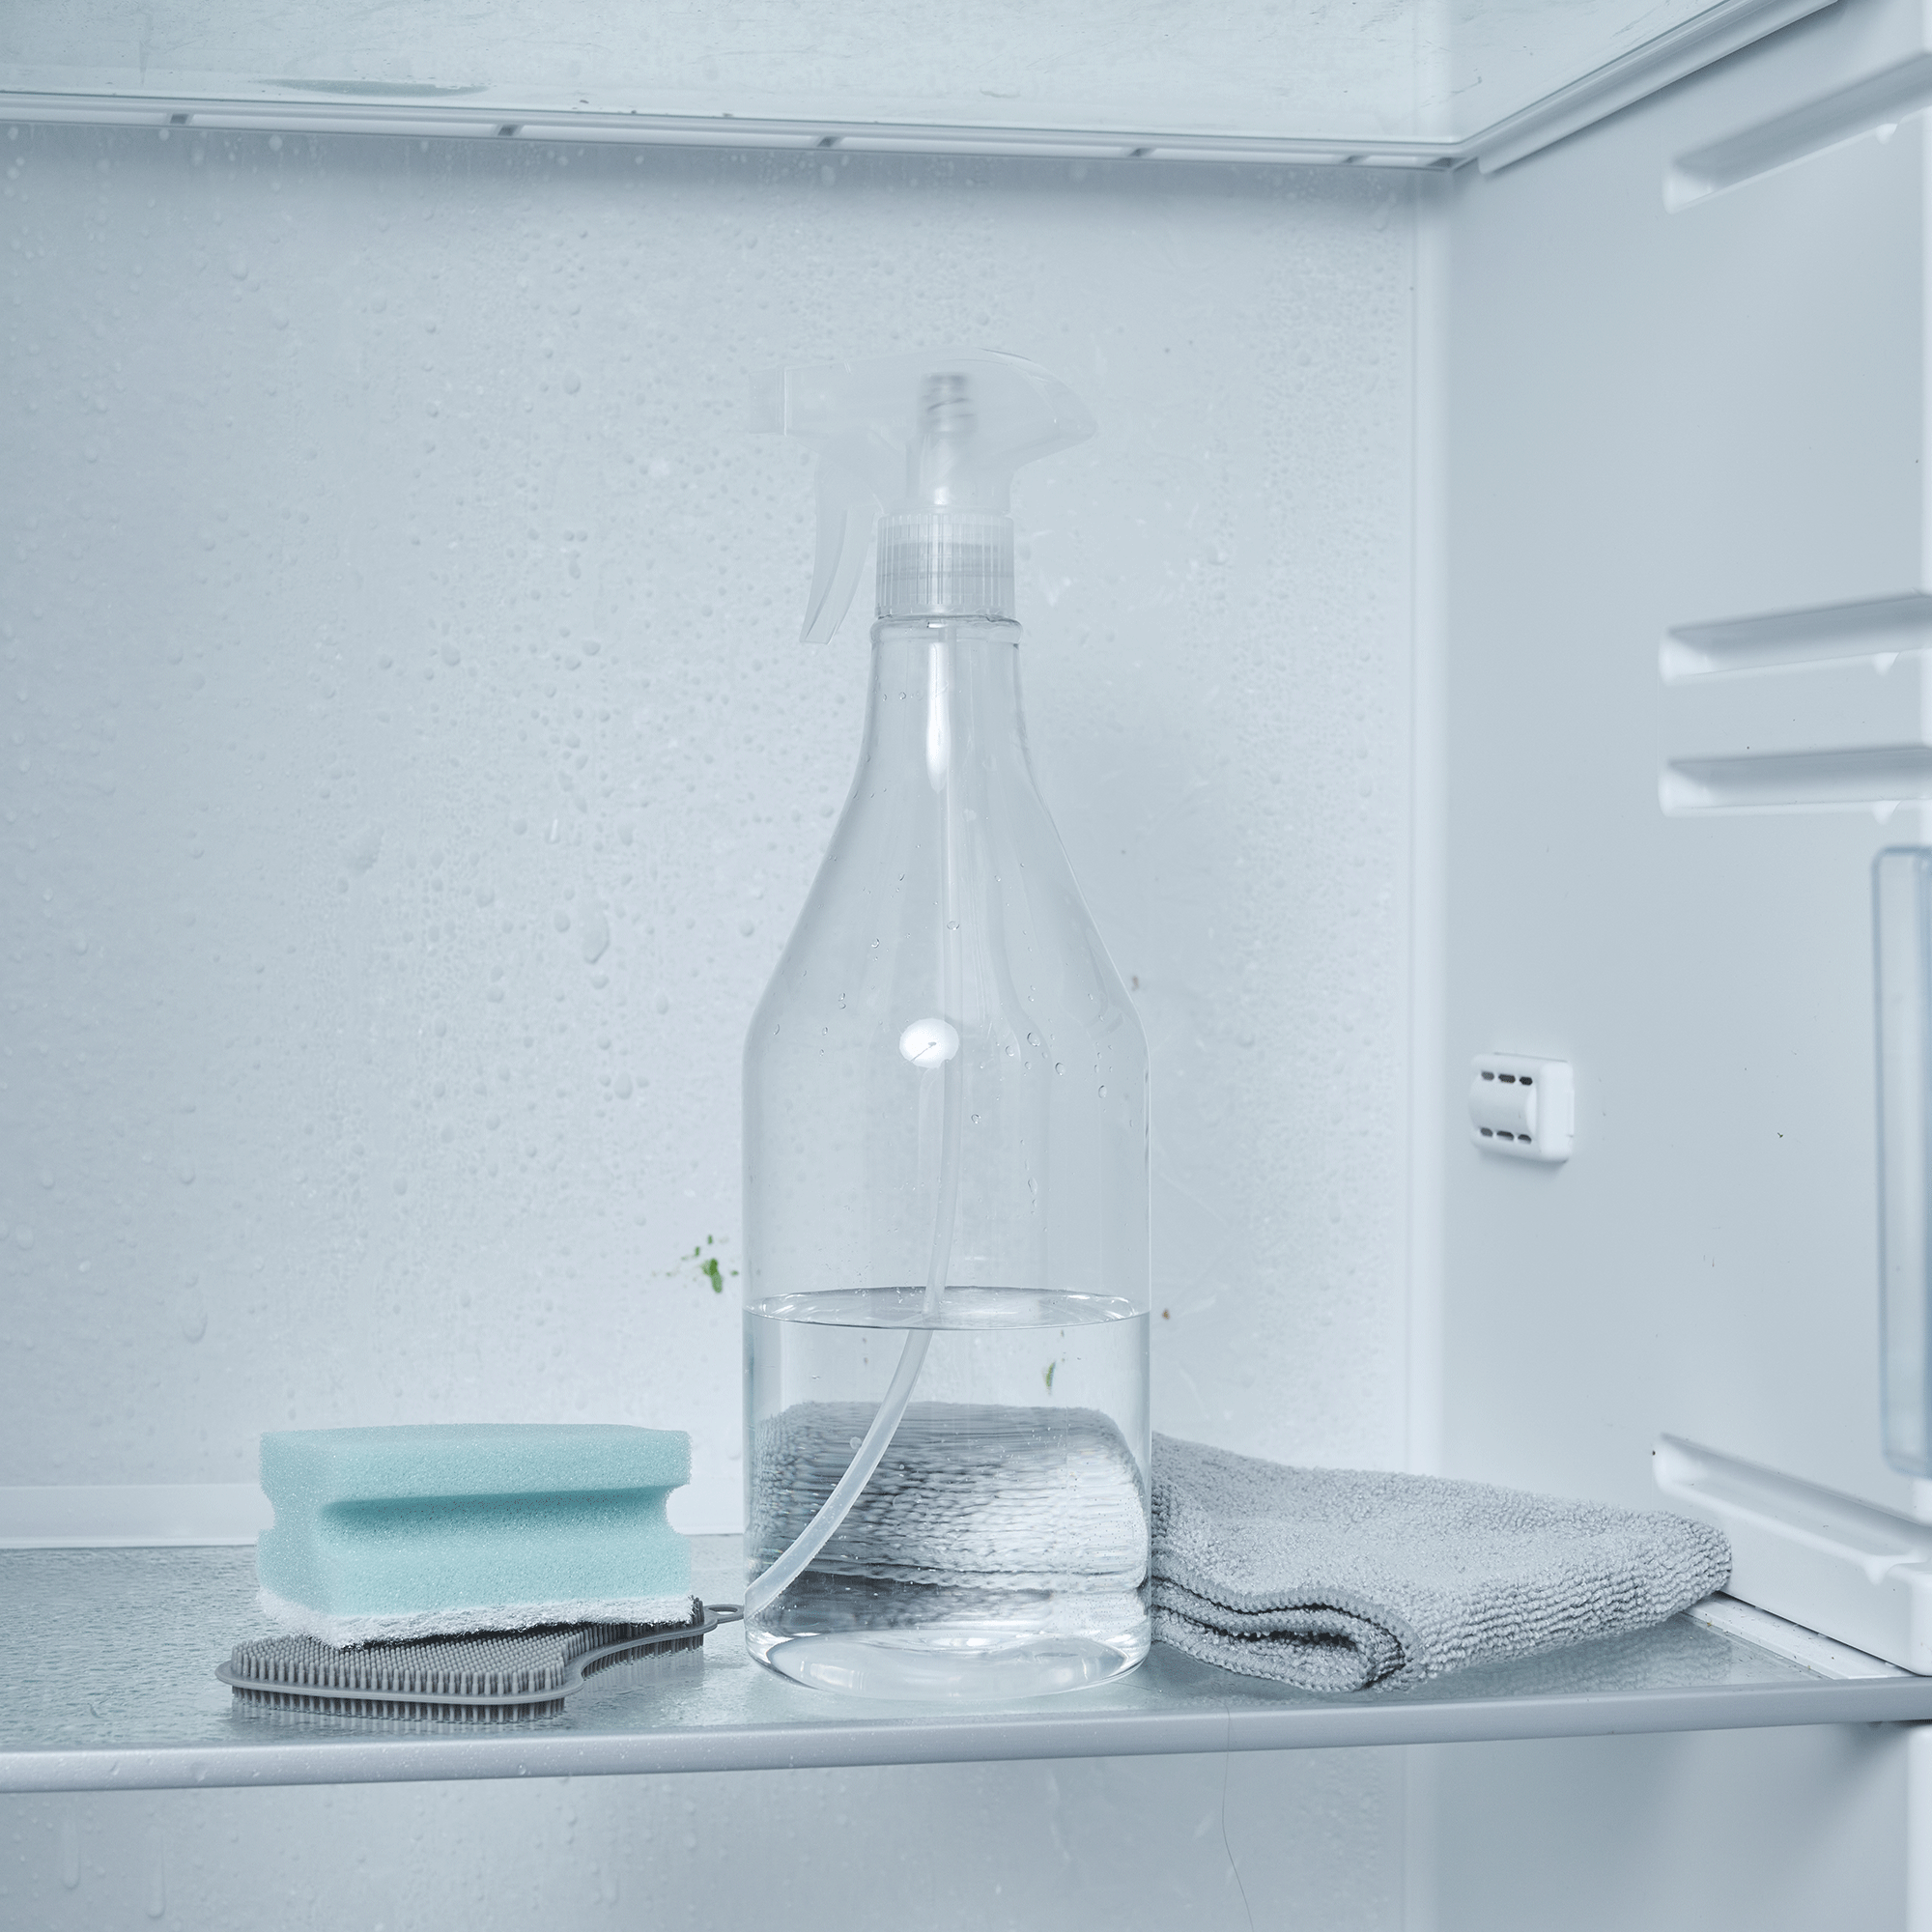 Open fridge with plastic spray bottle